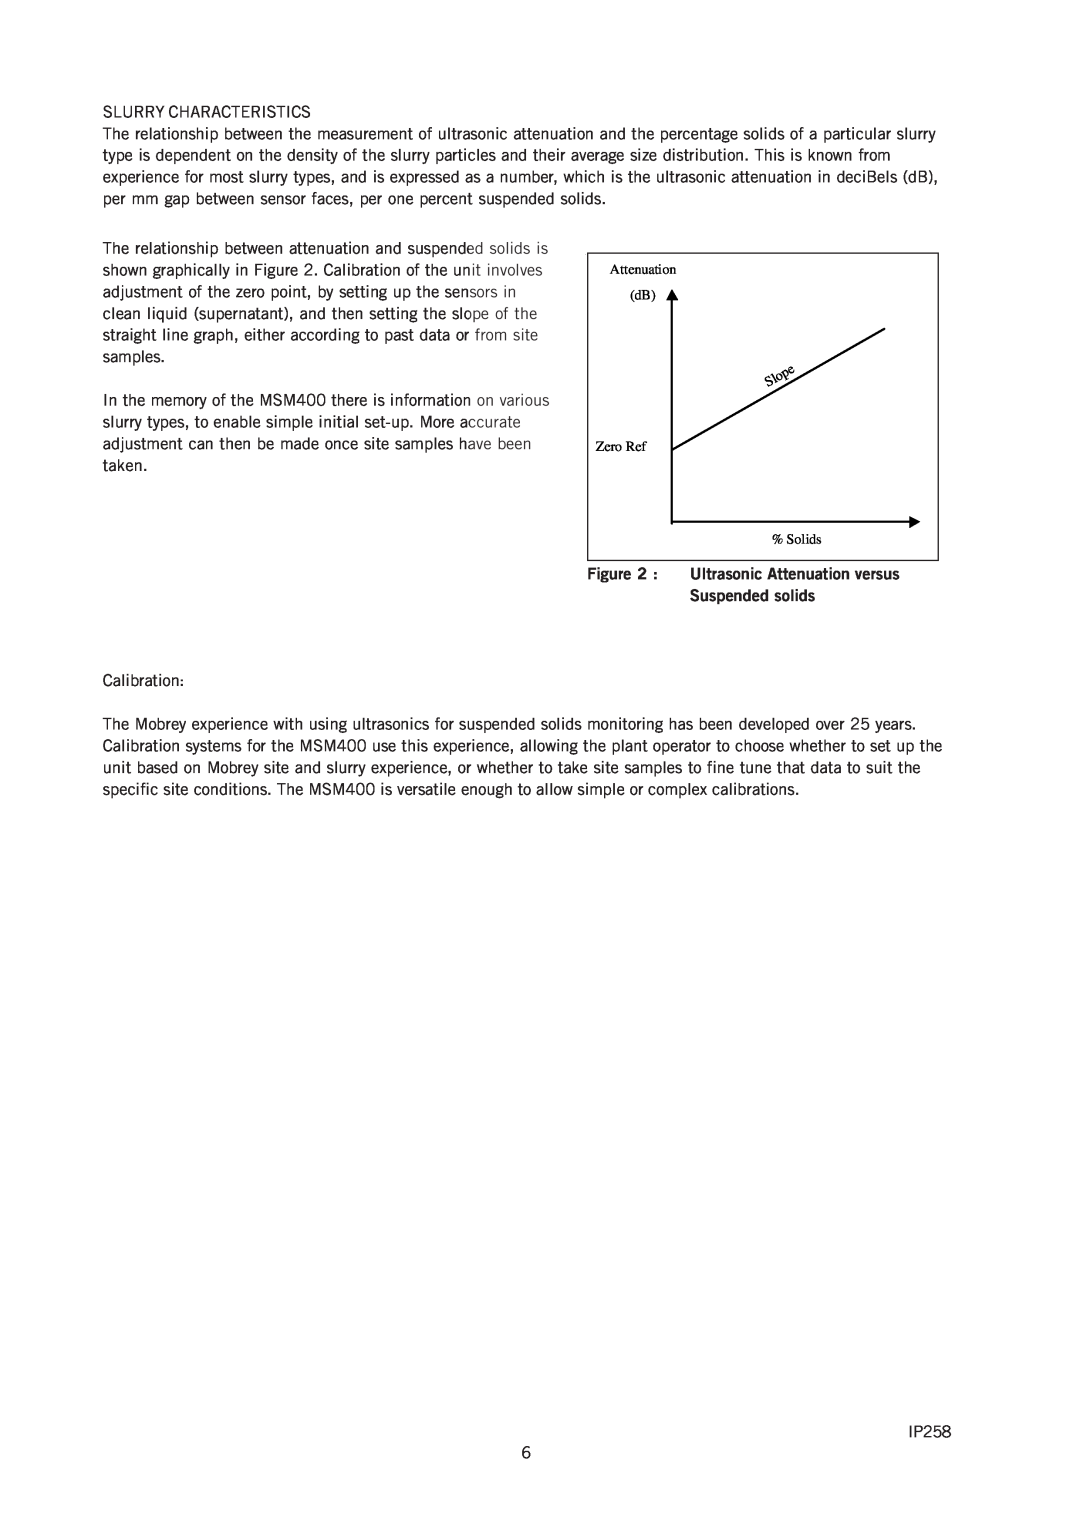 Emerson IP258 manual Ultrasonic Attenuation versus Suspended solids, Attenuation dB, Zero Ref, Solids 